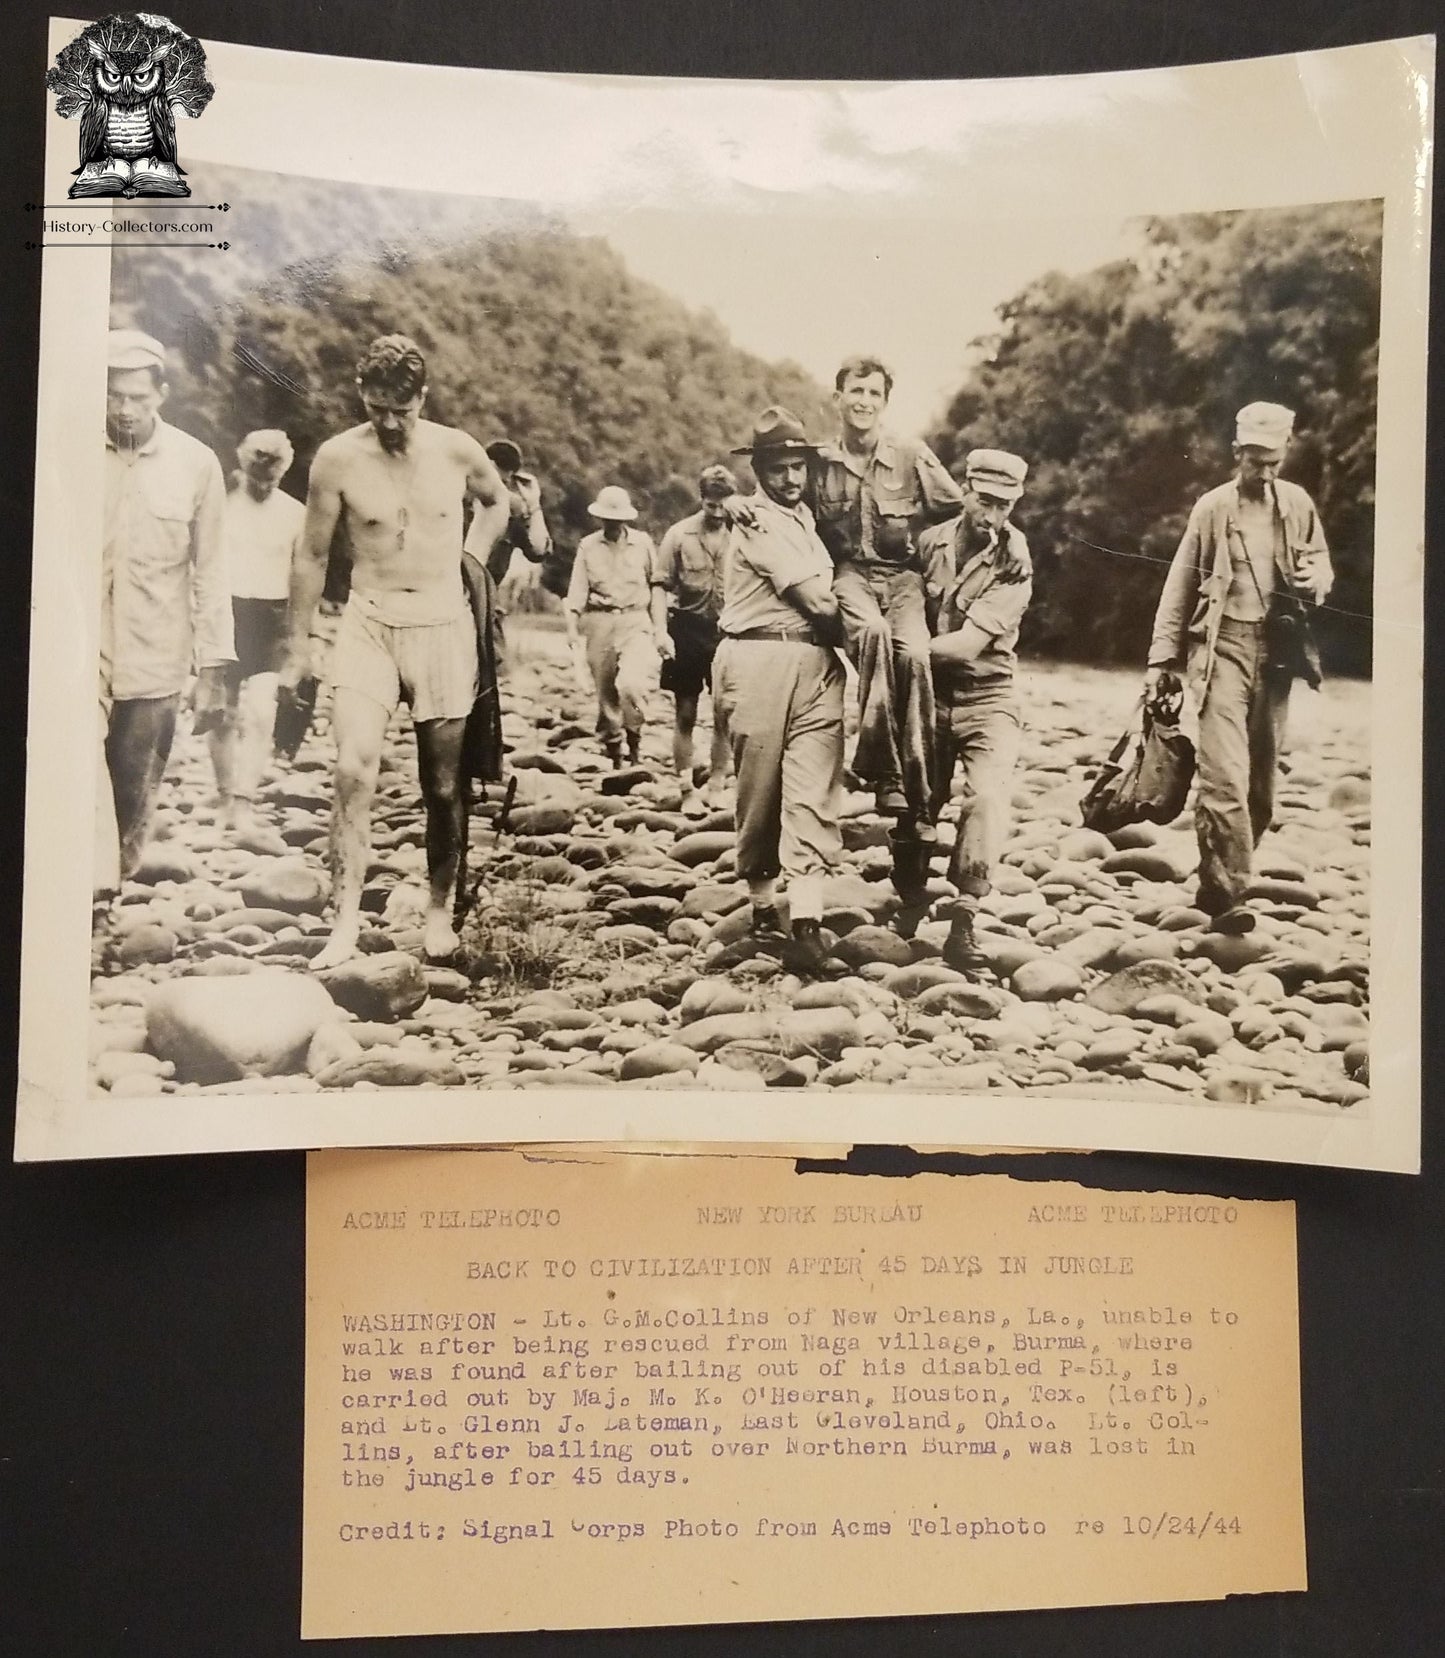 1944 WWII ACME Telephoto Press Release - Lost In Jungle Naga Burma - Disabled P-51 - Lt GM Collins New Orleans LA - Major MK O'Heeran Houston TX - Lt Glenn J Lateman East Cleveland OH